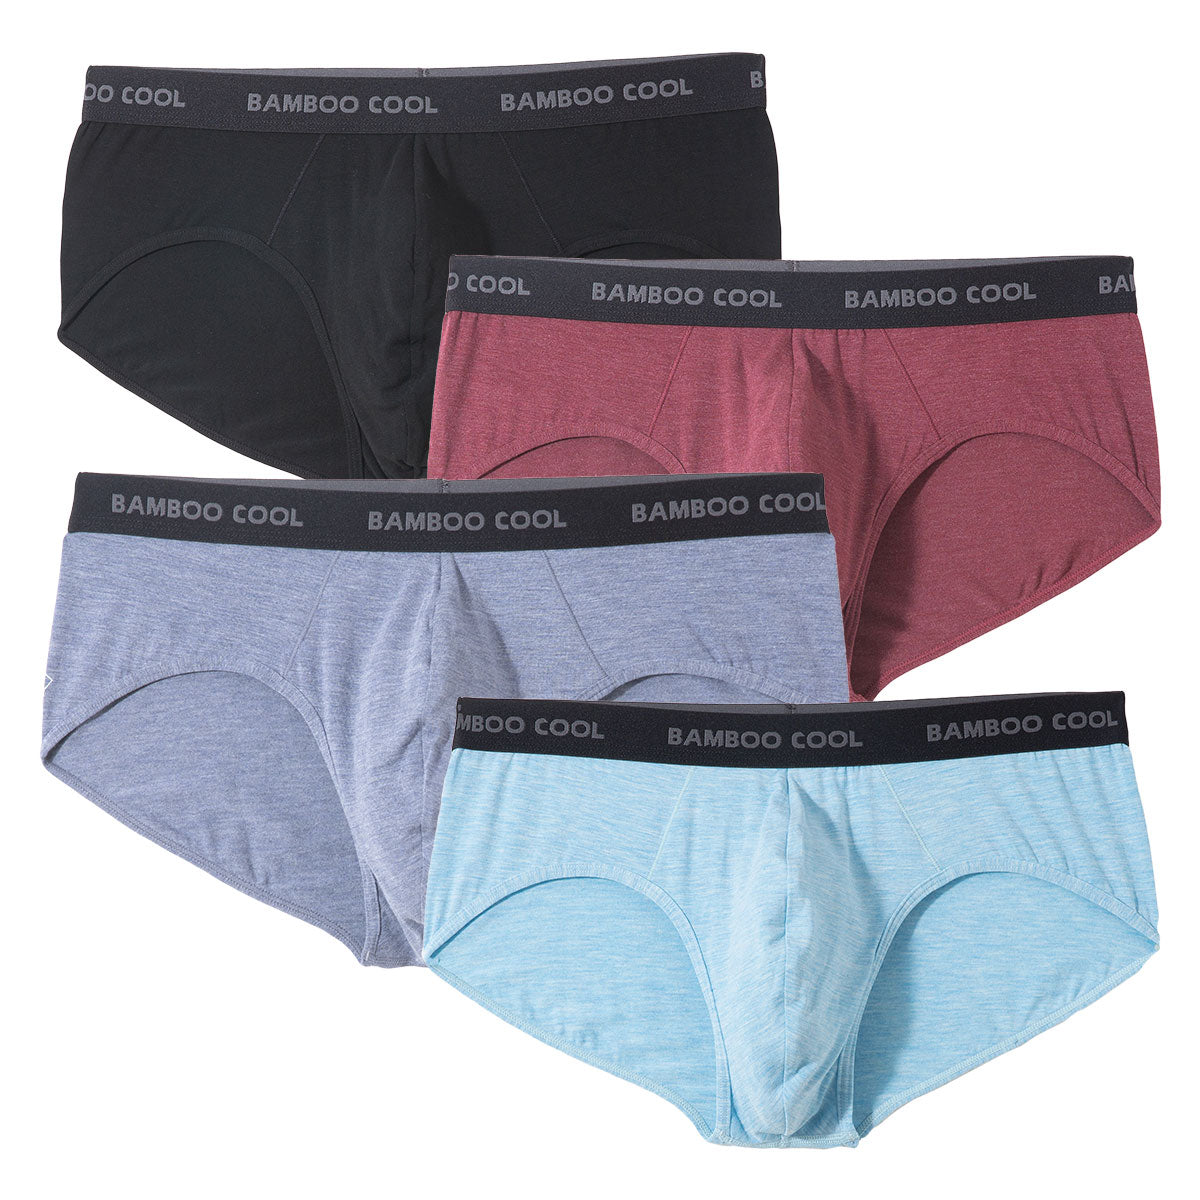 BAMBOO COOL Men's Underwear Breathable,Premium Comfort Soft Boxer  Briefs,Bamboo Underwear for Men,4 Pack 